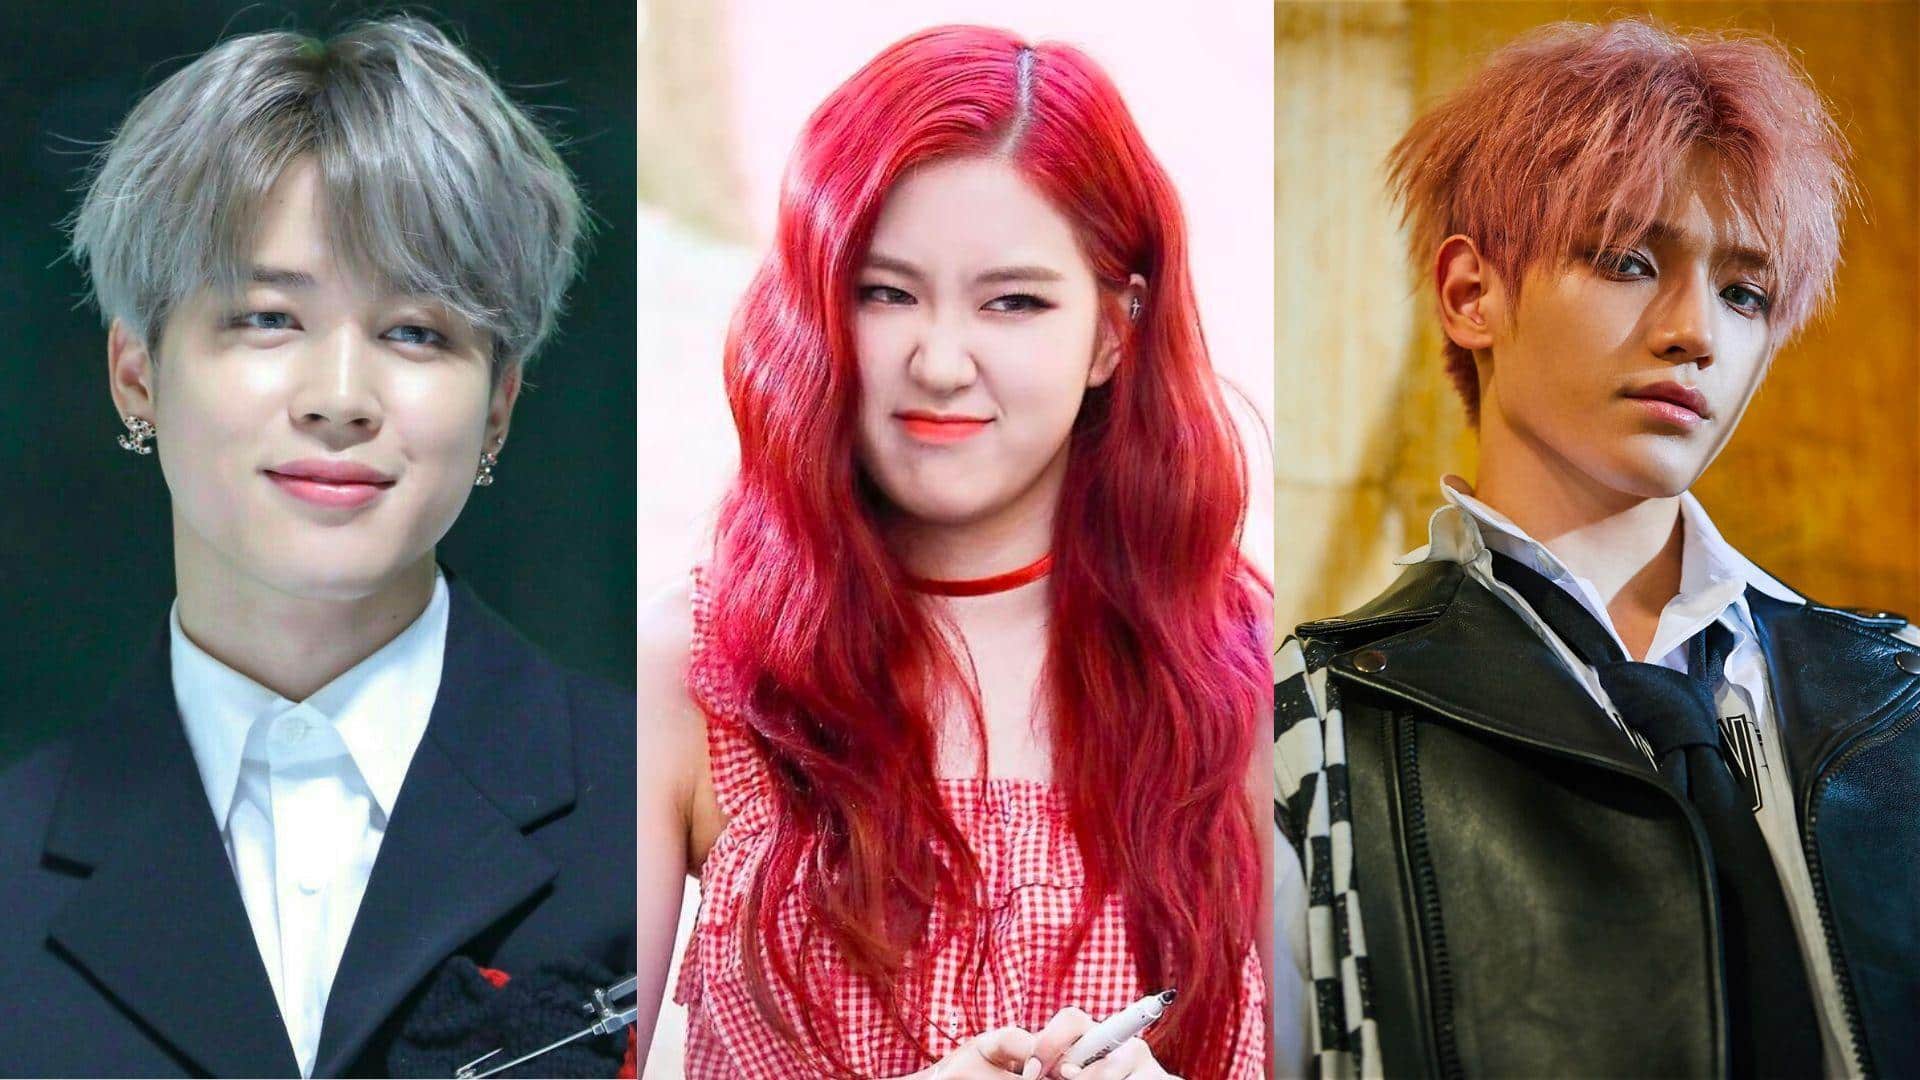 Explainer: Decoding why K-pop star's hair color sparks global attention